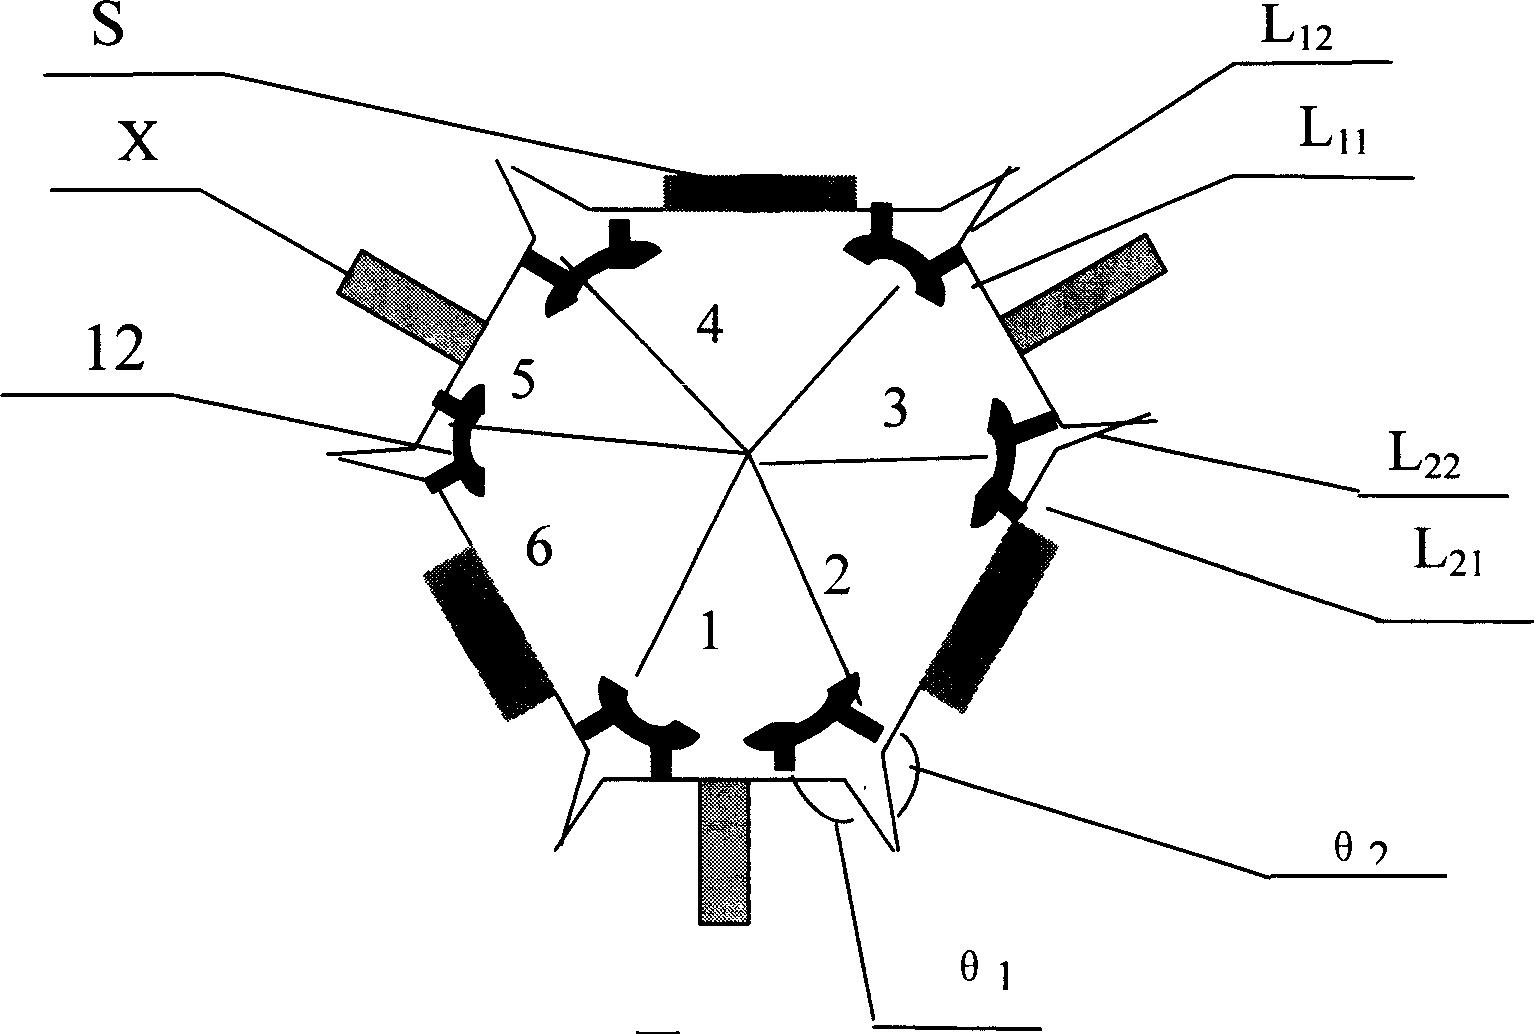 Four-polarization six-sector array omnidirectional antenna